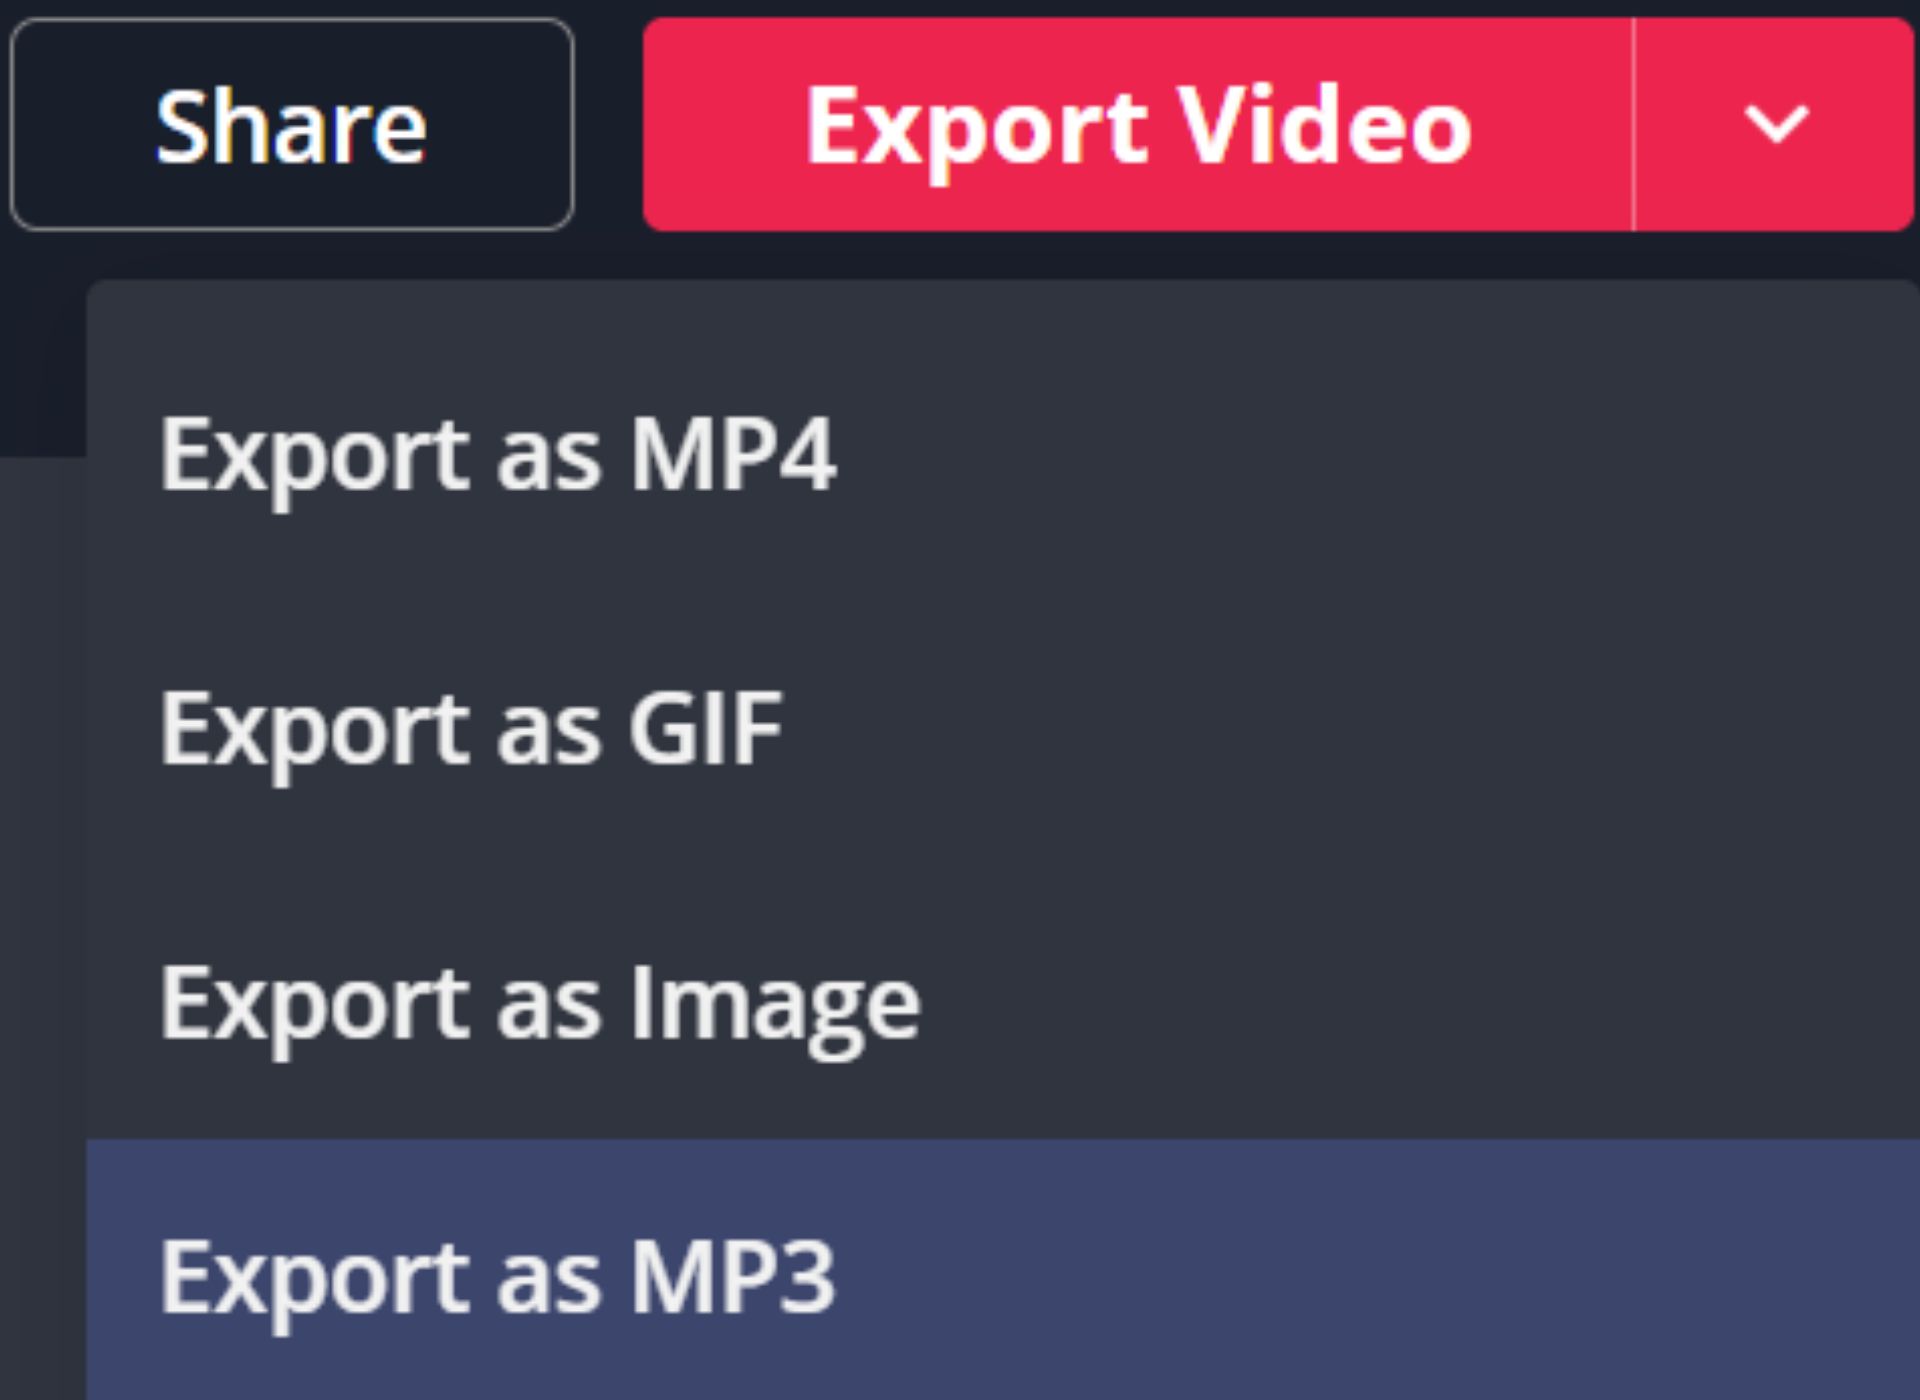 Export Video and Download Screen